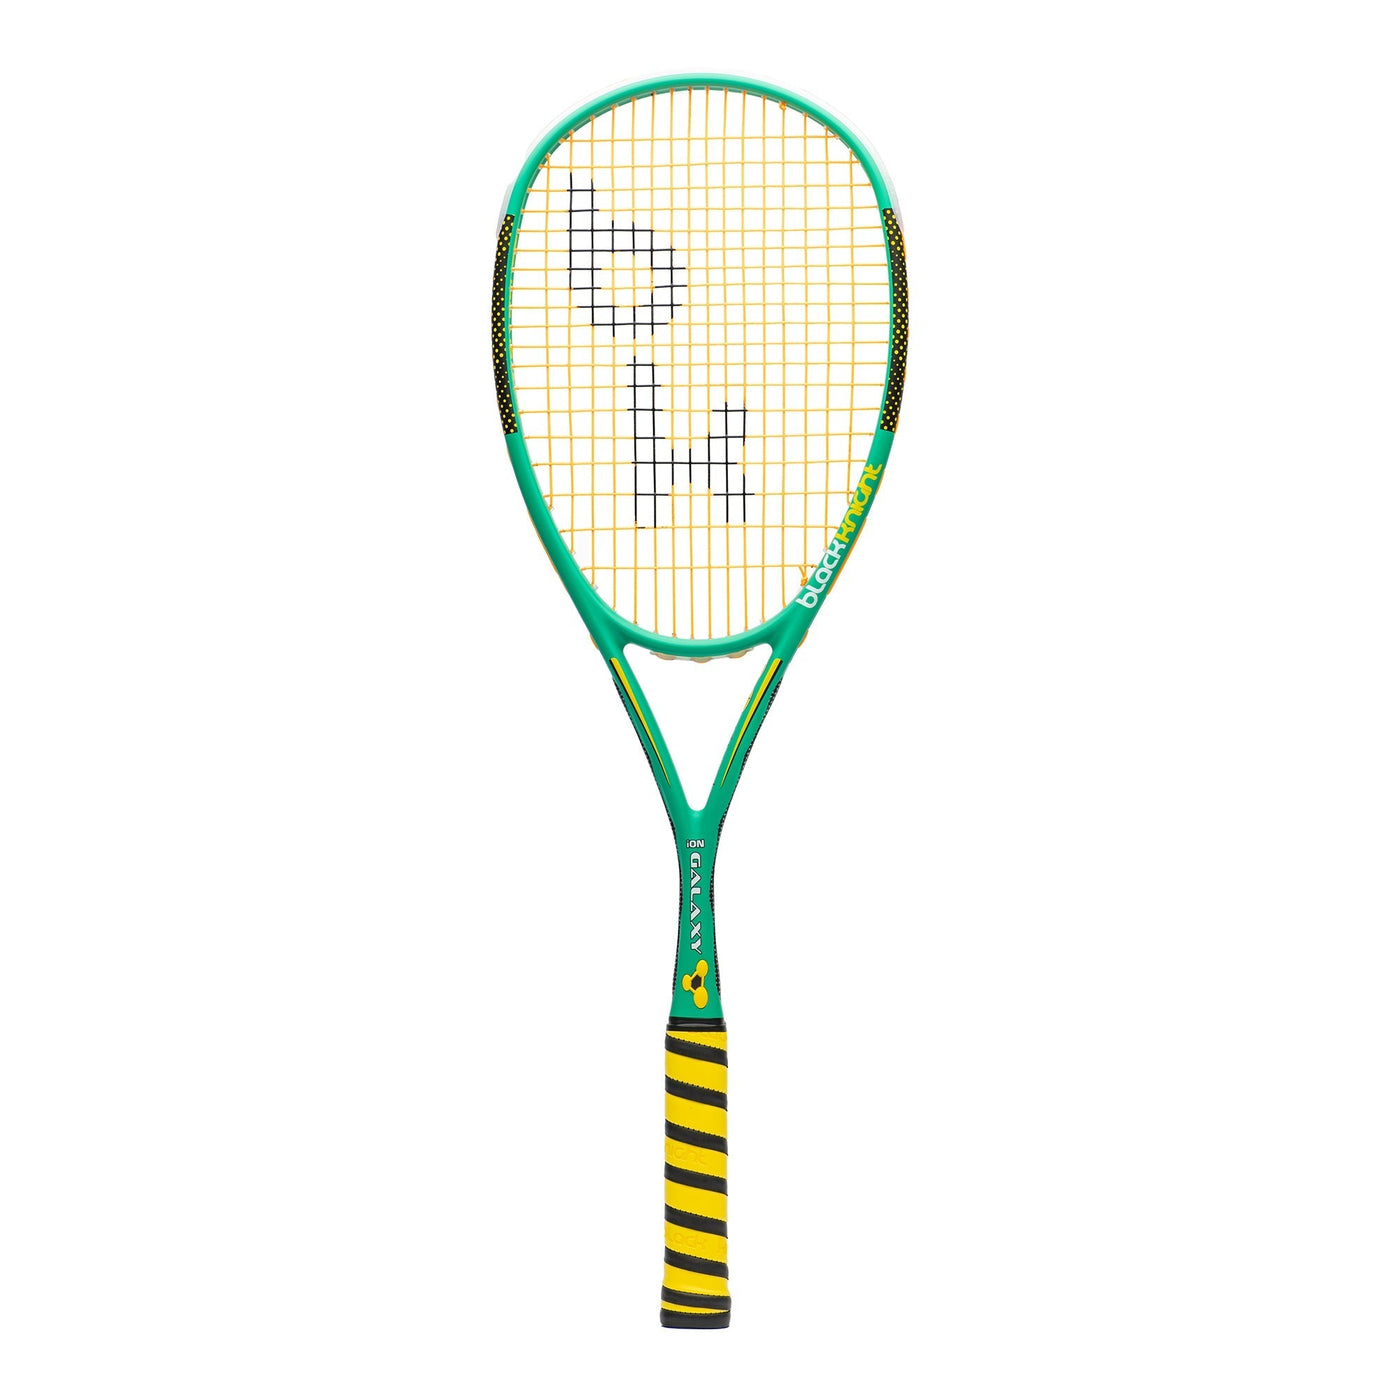 *NEW* Ion Galaxy Squash Racquet